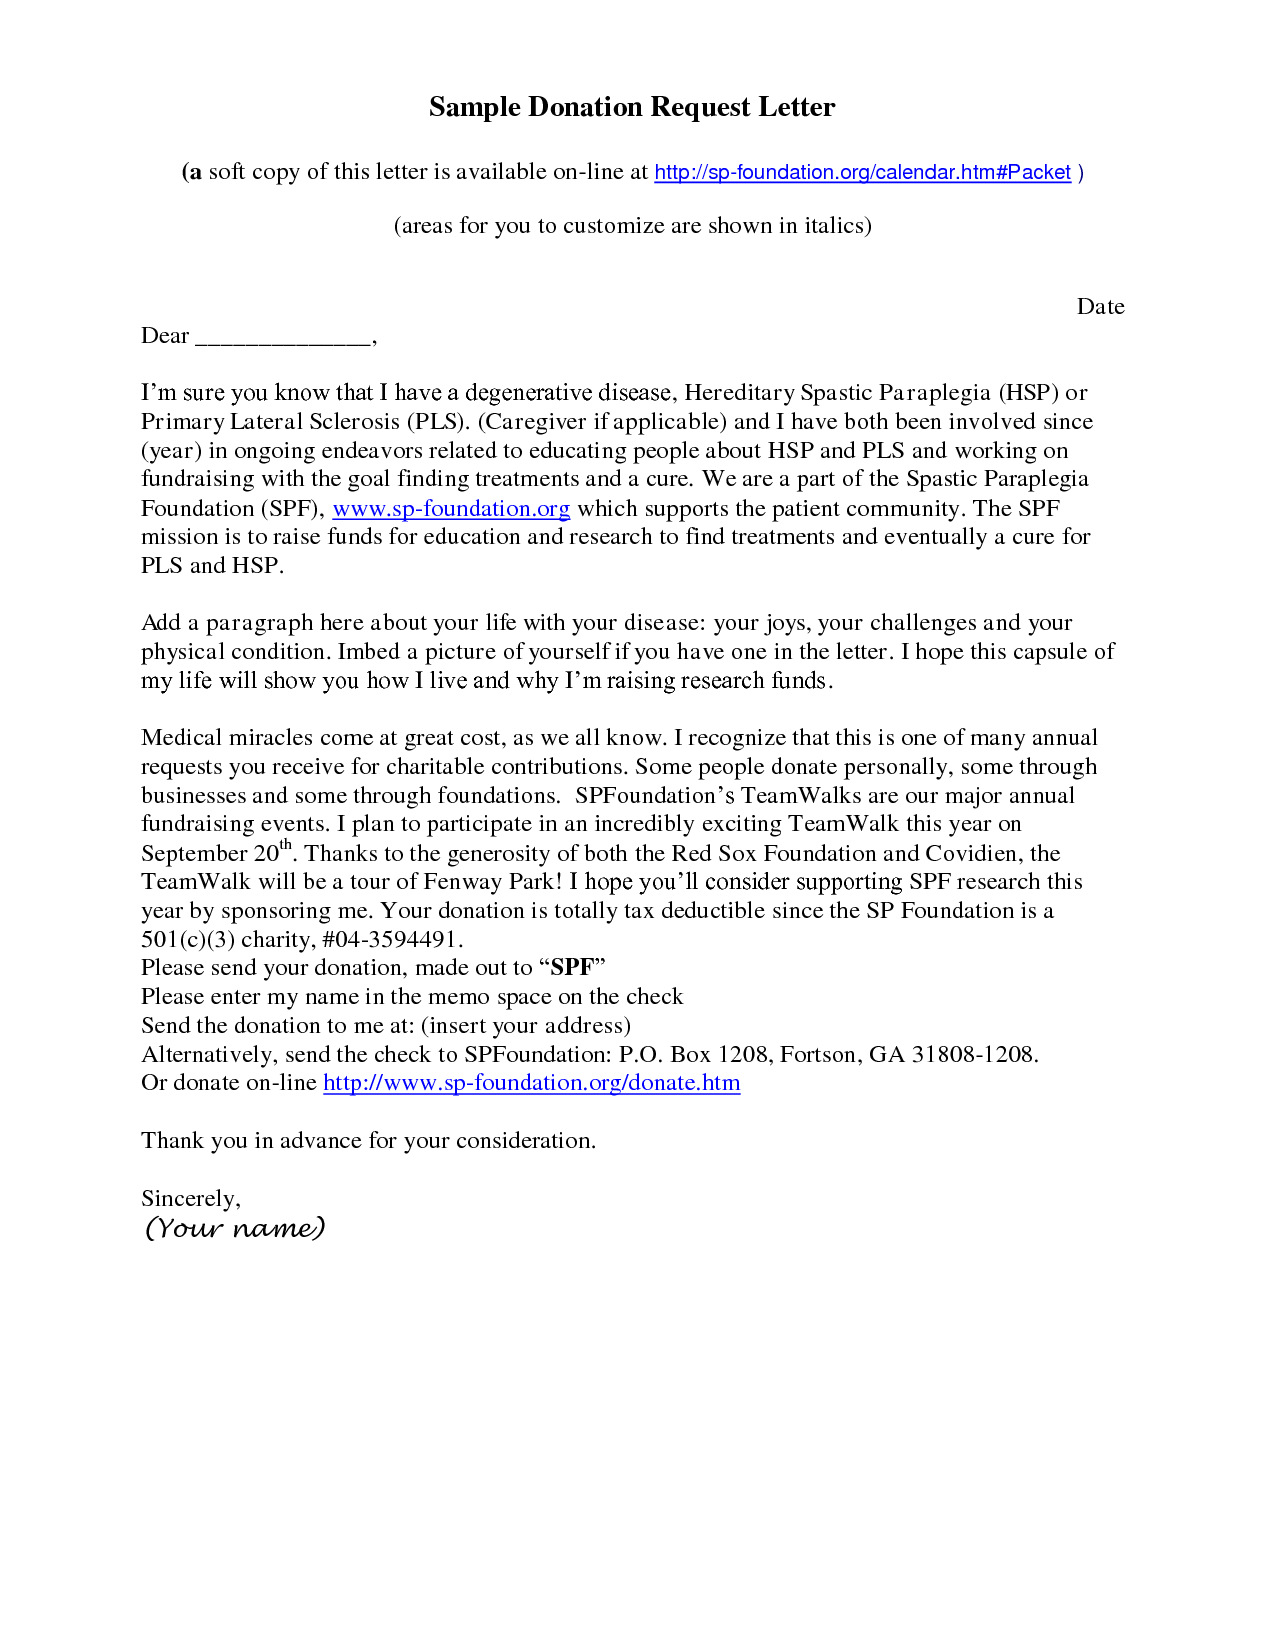 Food Donation Letter Template - Letter Sample Request for Donation Copy Donation Request Letter